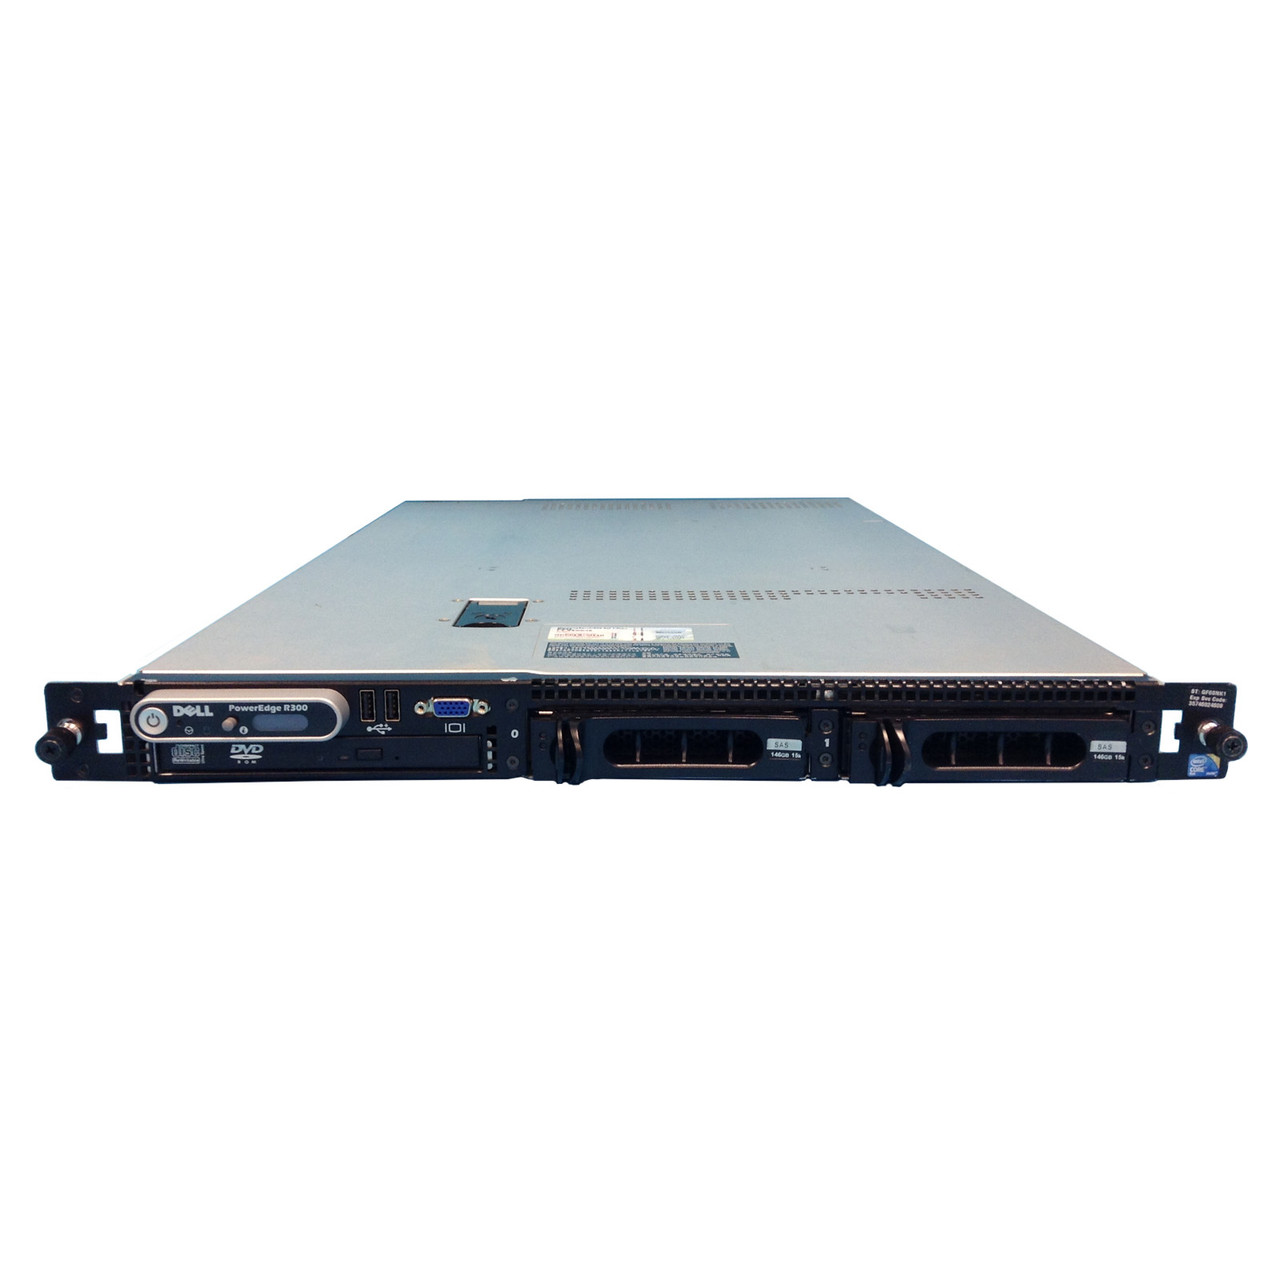 Refurbished Poweredge R300 Server | Used Poweredge R300 Server